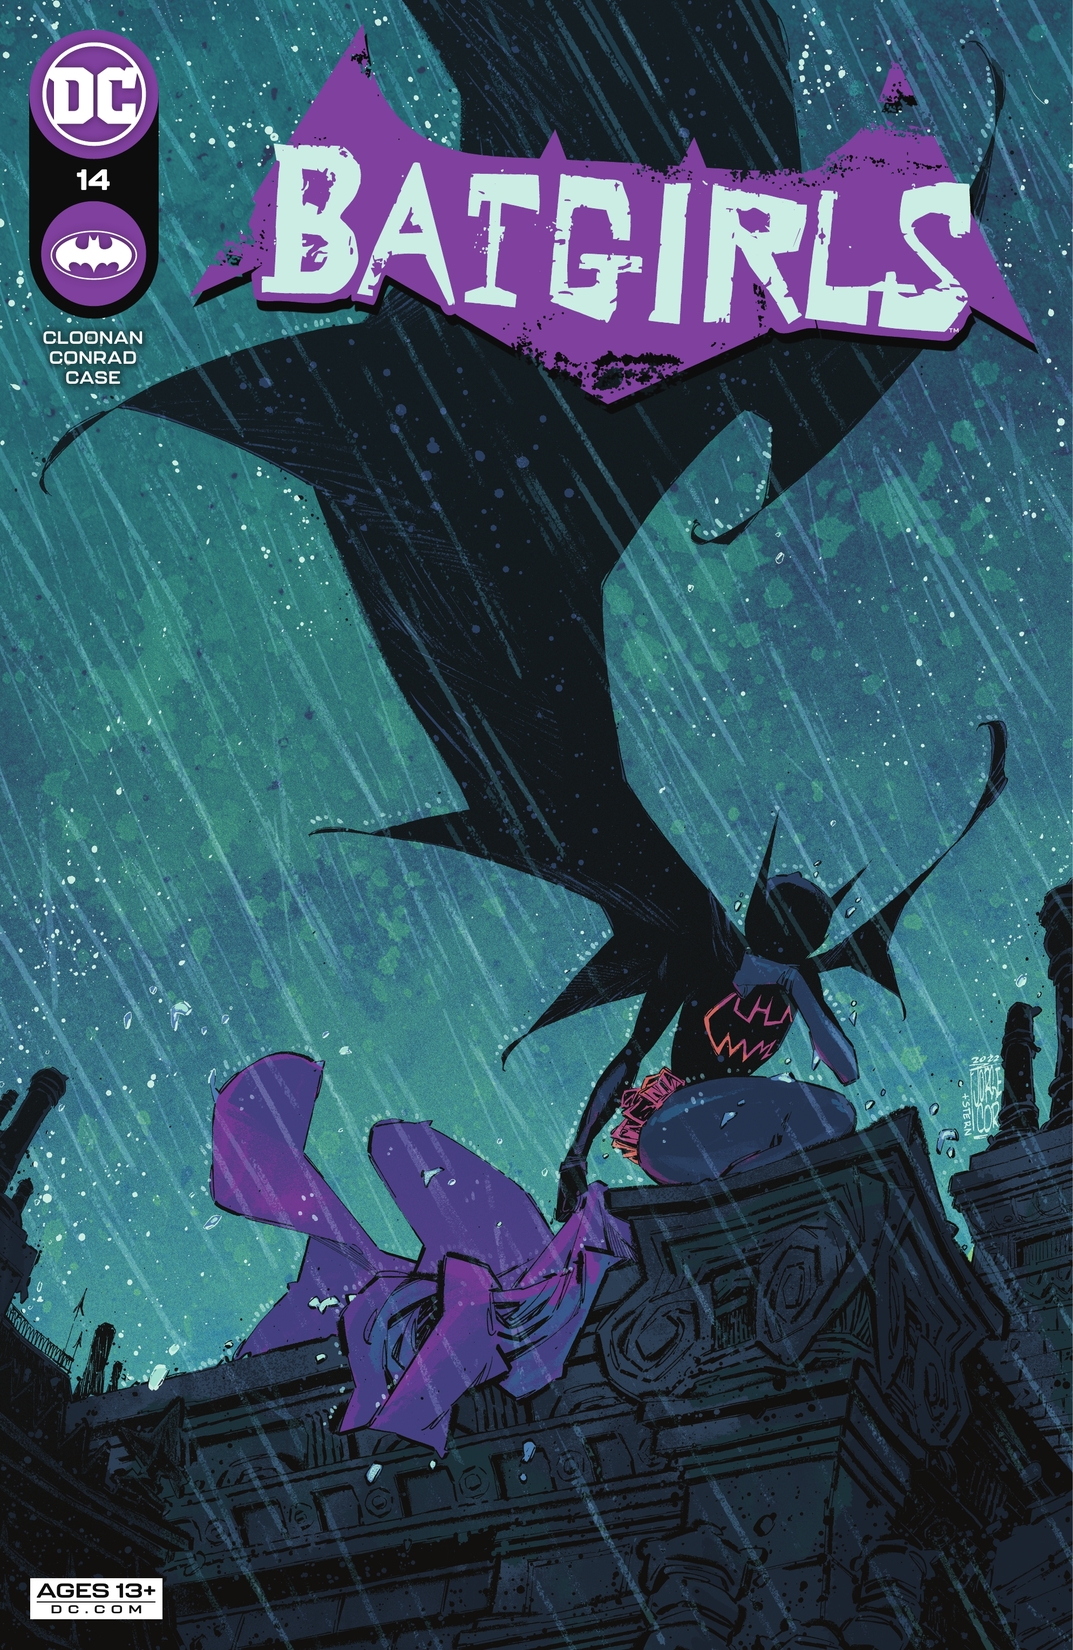 Batgirls #14 preview images